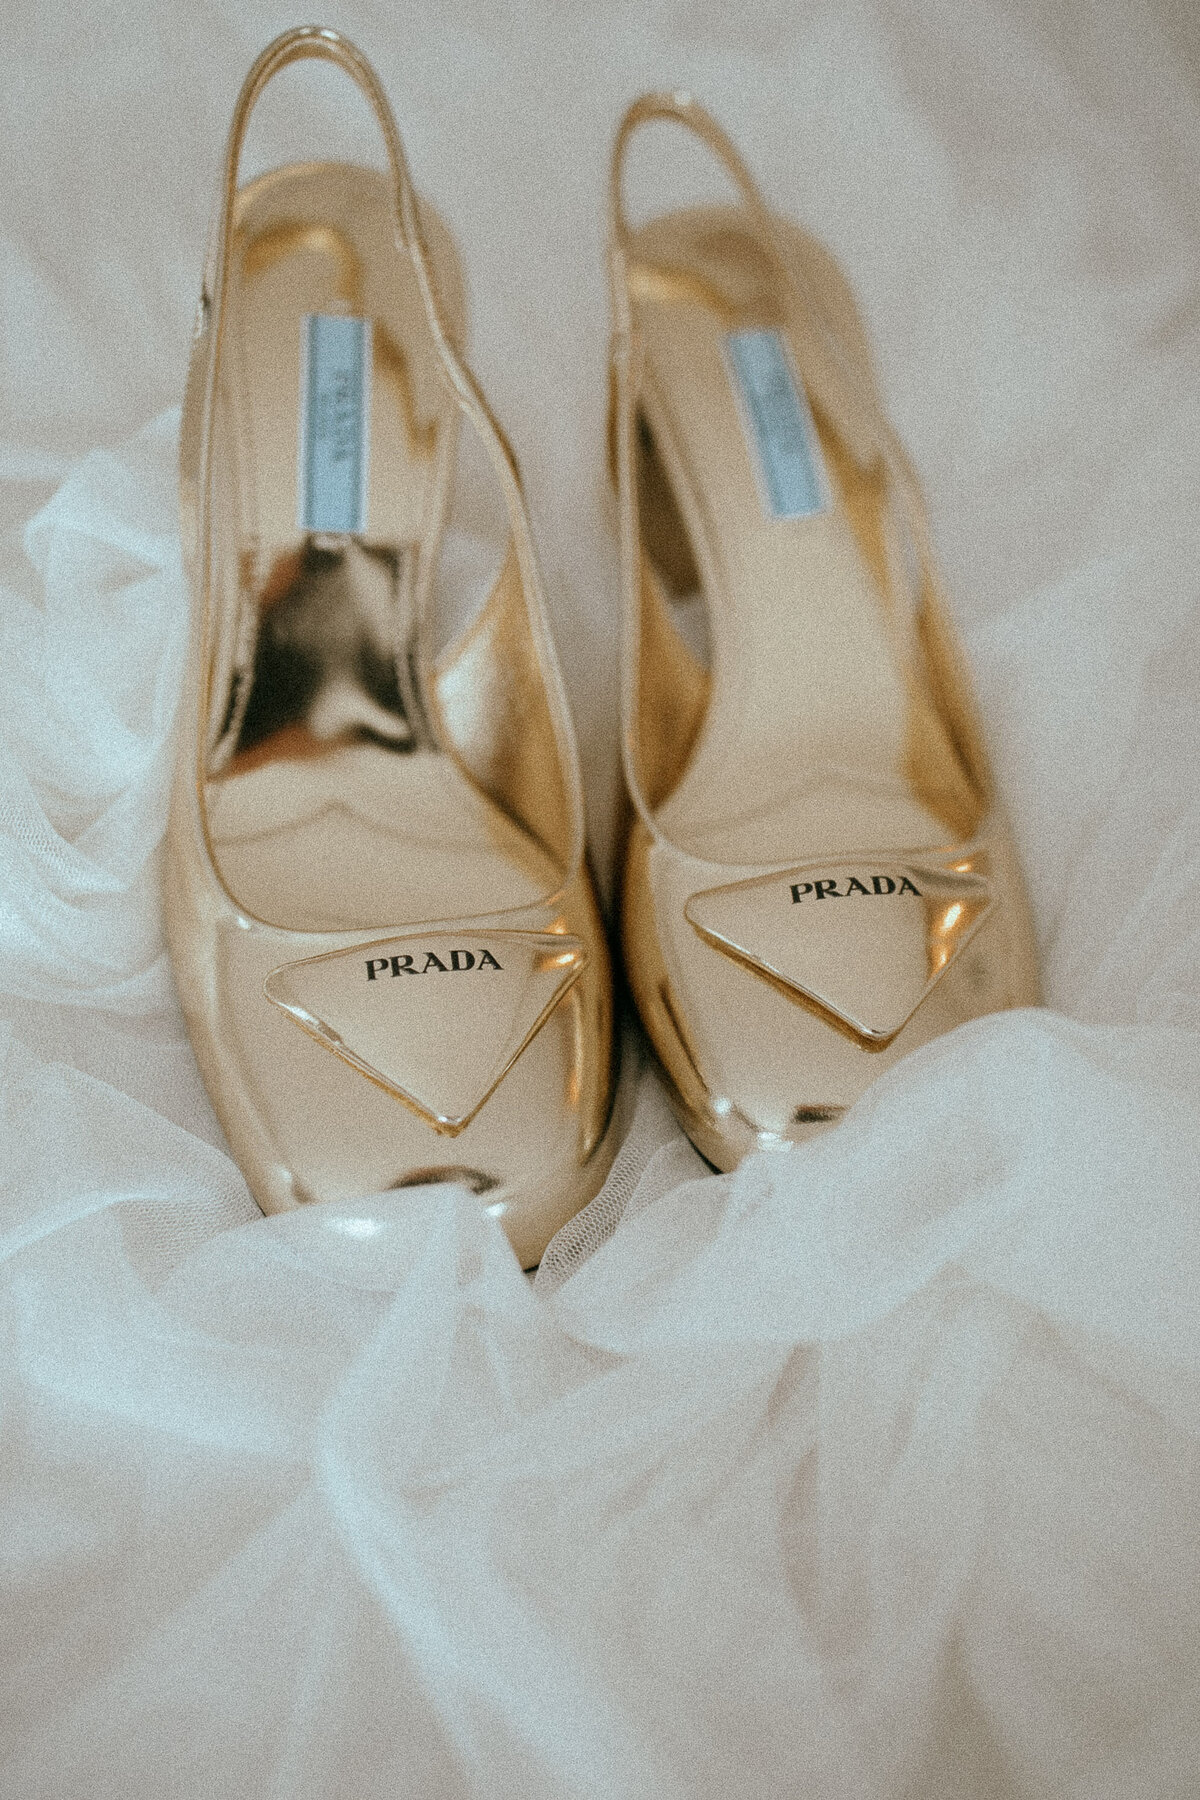 Prada_bridal_shoes_Raphaelle_Granger_Montreal_Toronto_Europe_Luxury_wedding_photographer-1